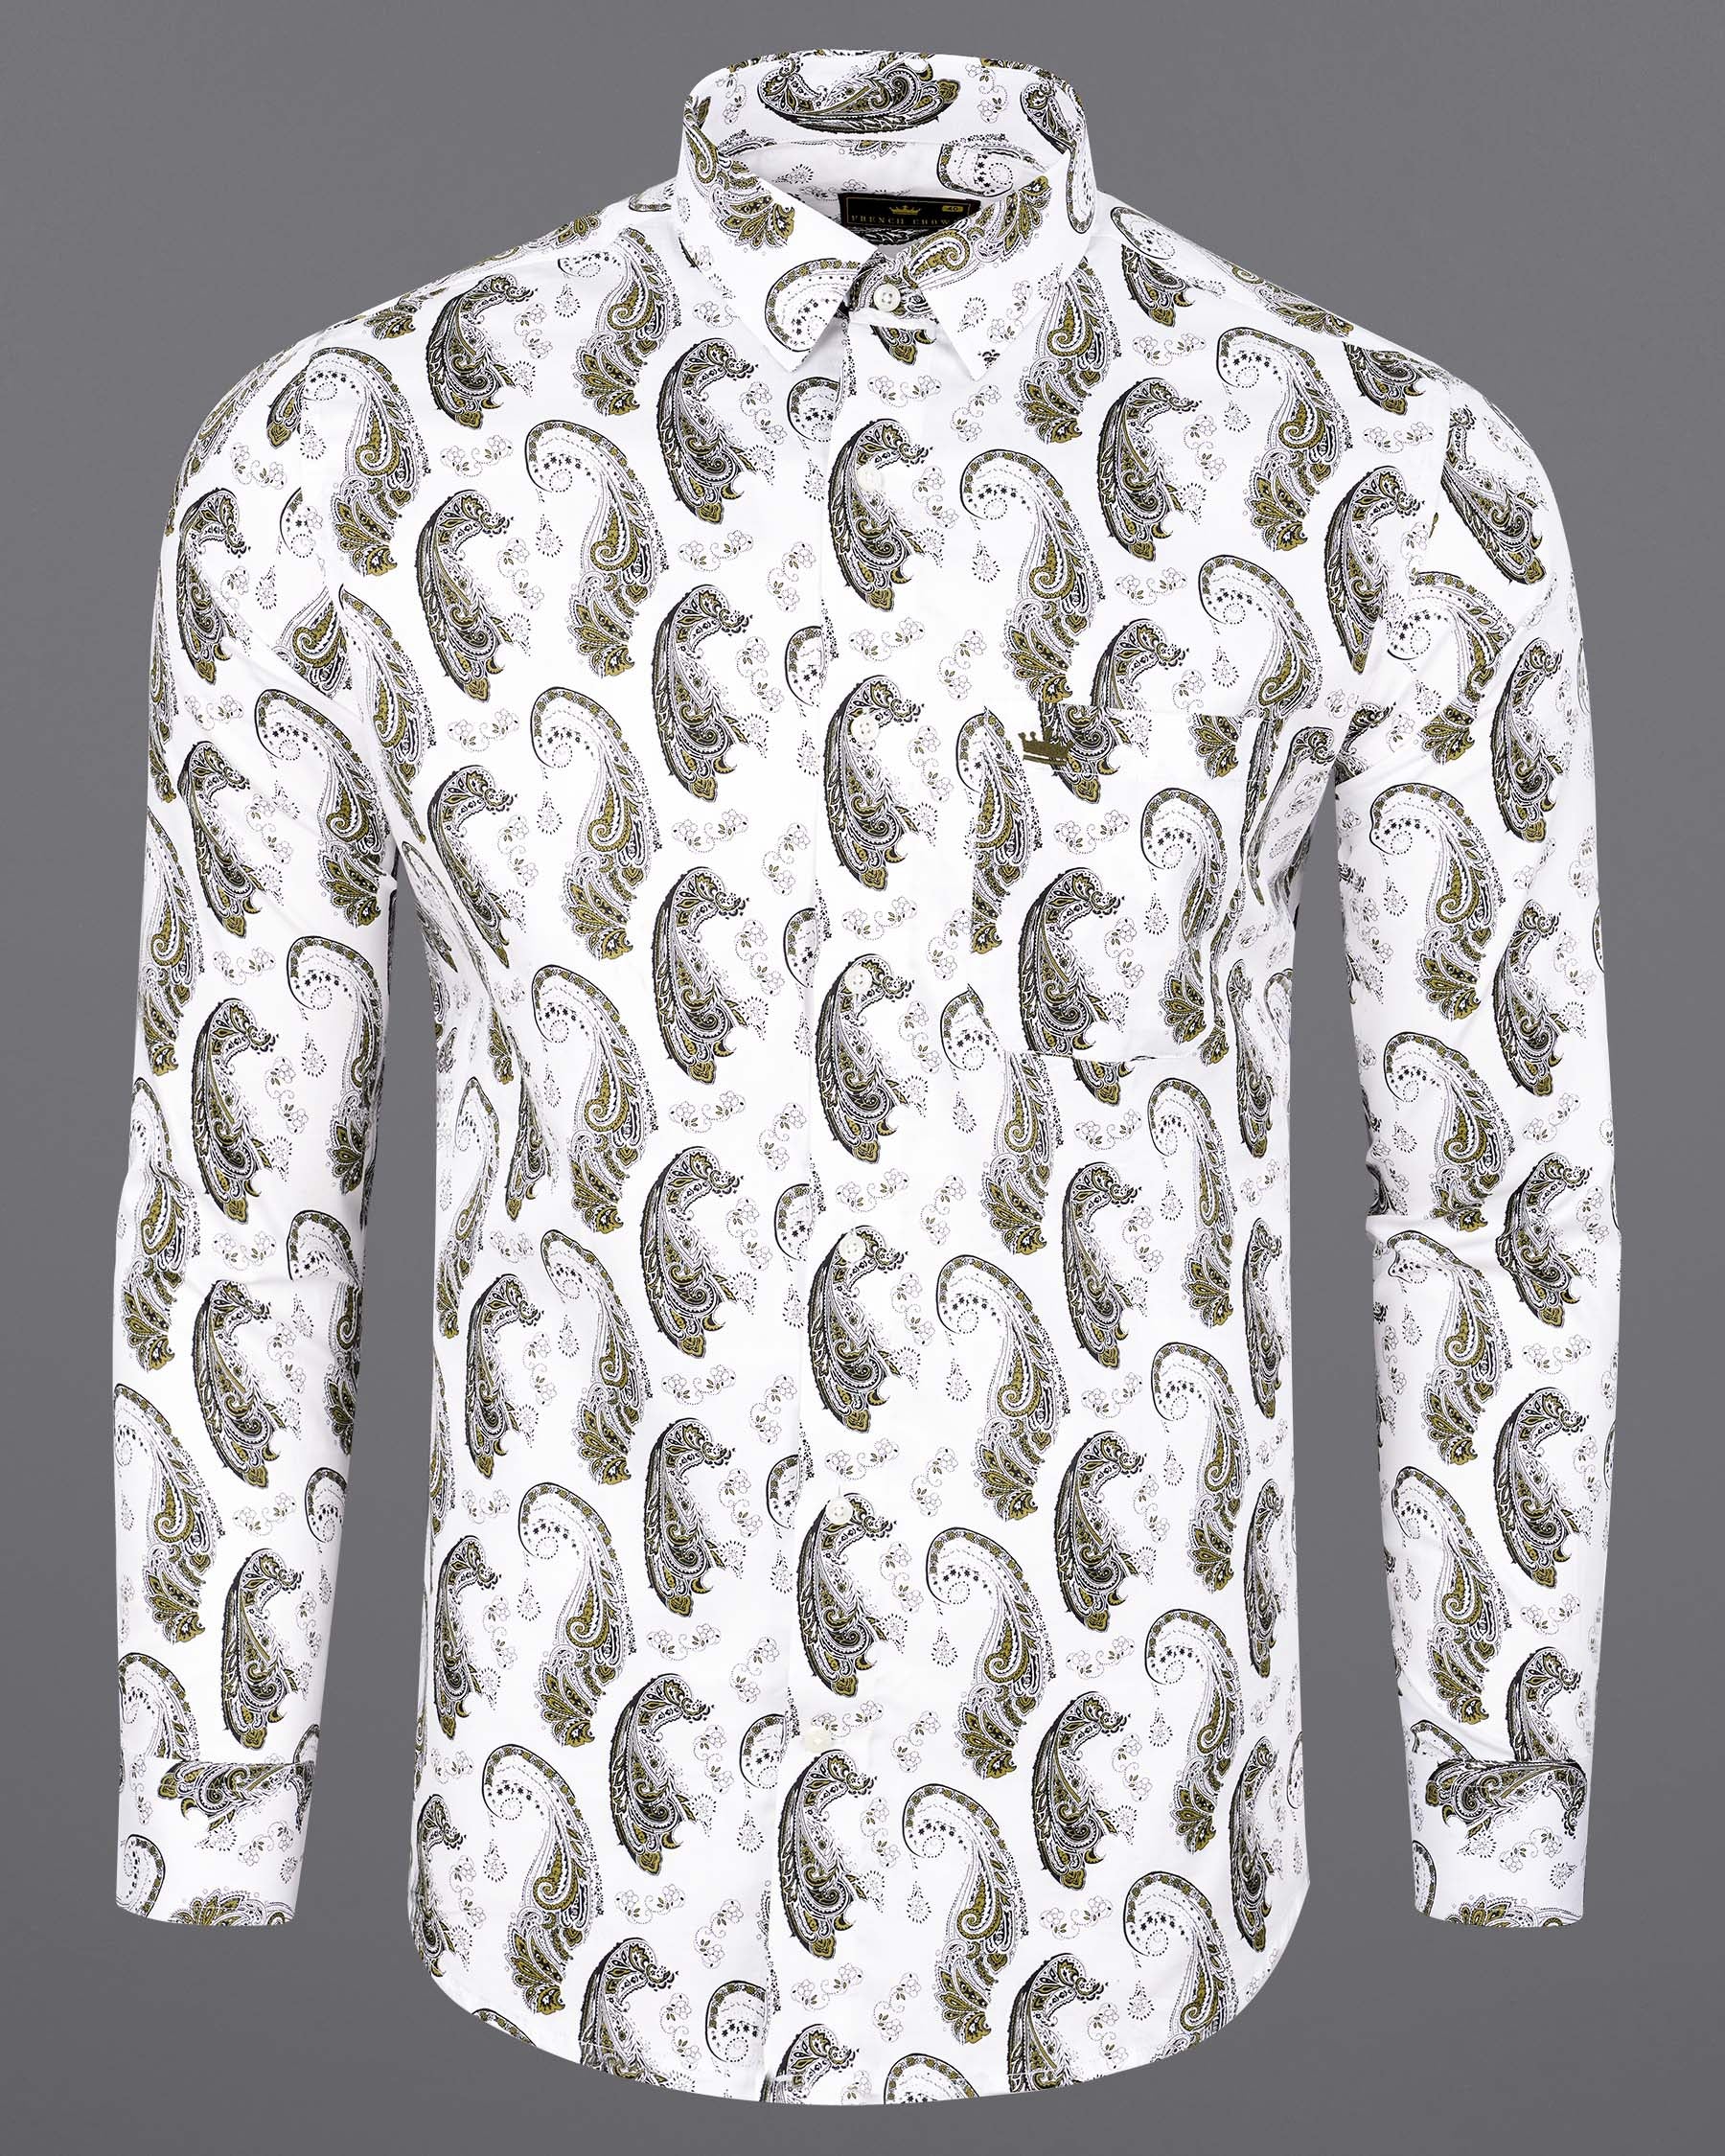 Bright White Paisley Printed Super Soft Premium Cotton Shirt 7648-38, 7648-H-38, 7648-39,7648-H-39, 7648-40, 7648-H-40, 7648-42, 7648-H-42, 7648-44, 7648-H-44, 7648-46, 7648-H-46, 7648-48, 7648-H-48, 7648-50, 7648-H-50, 7648-52, 7648-H-52